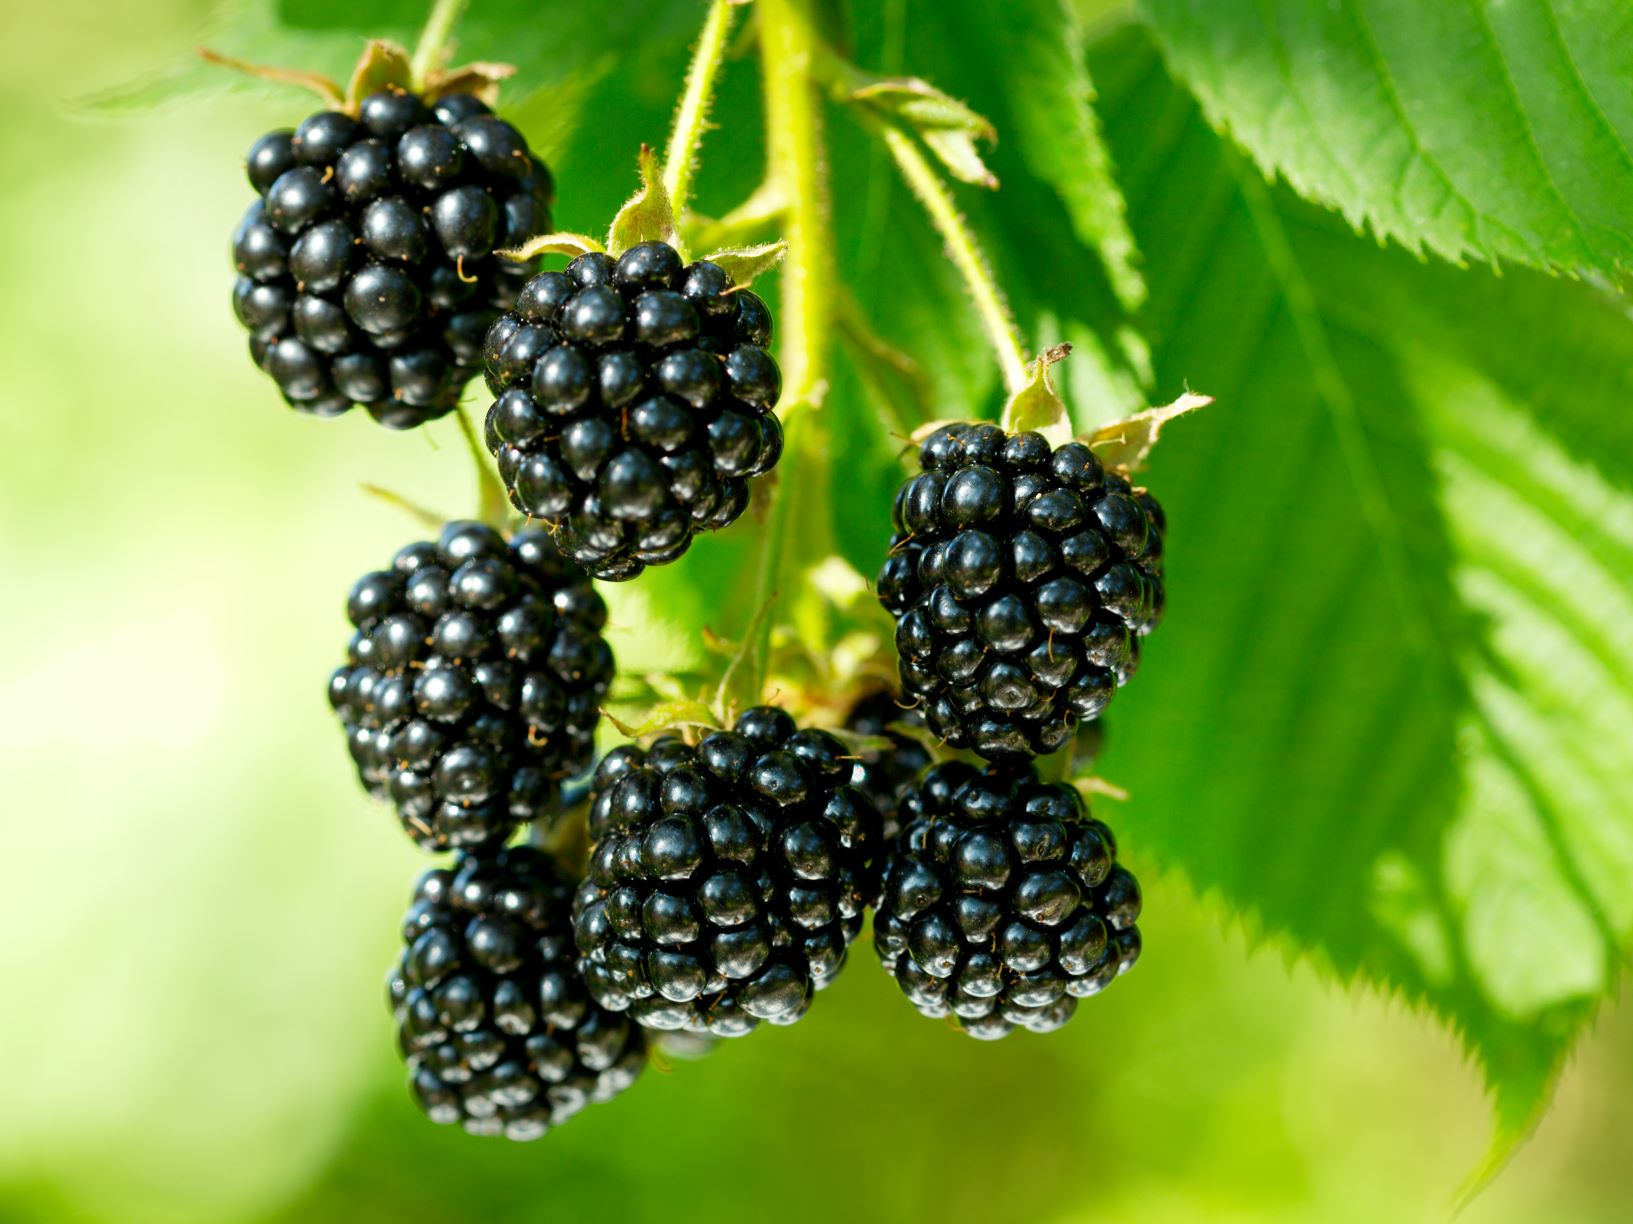 Cluster of blackberries.